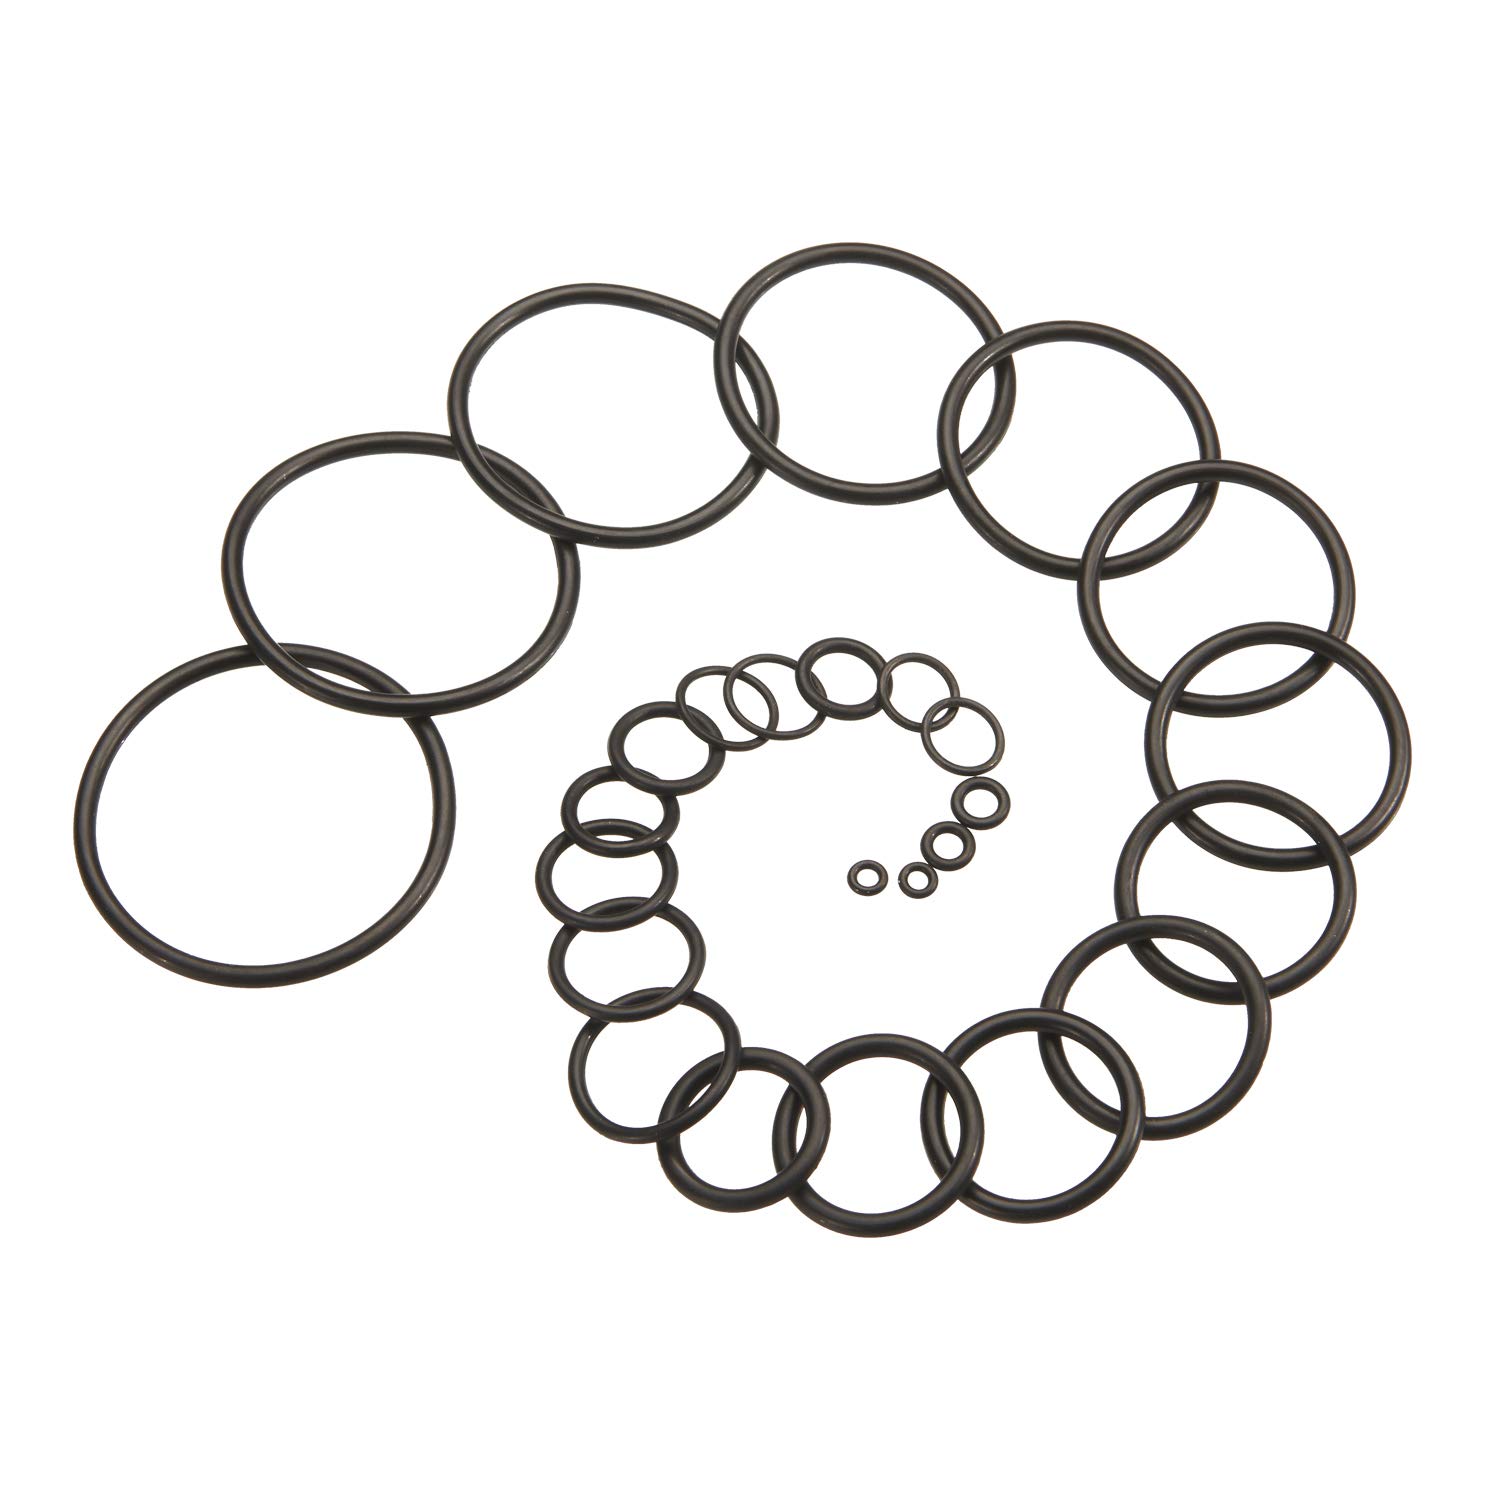 Universal O-Ring Assortment Set, Metric - 419 Rings